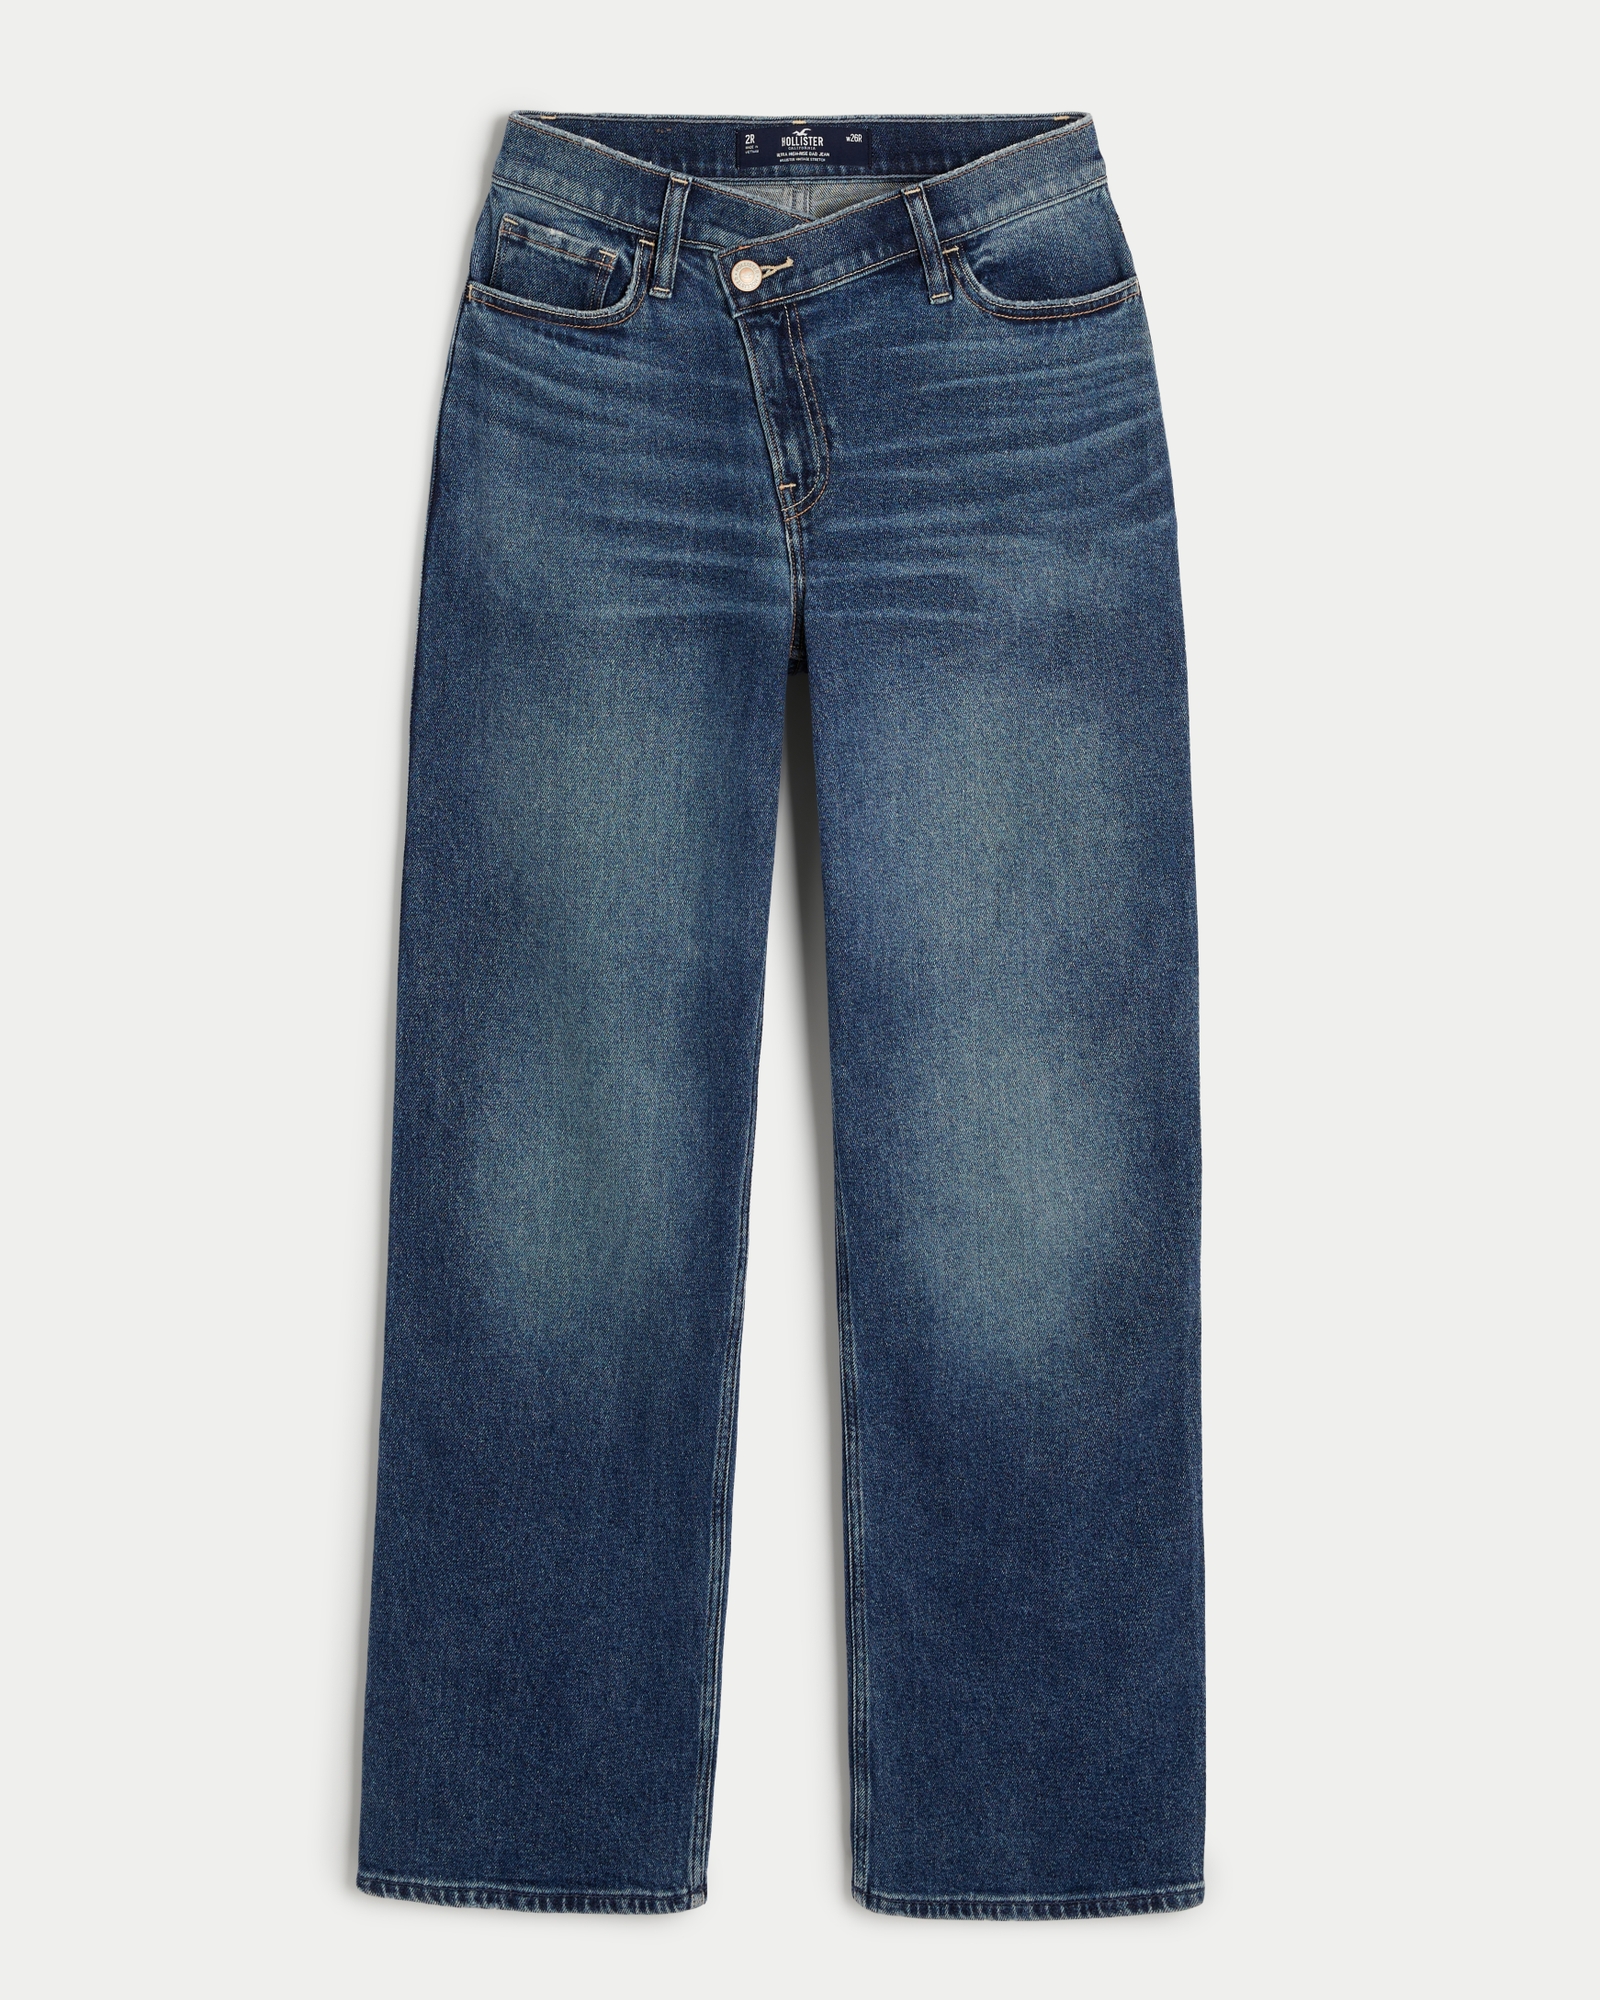 hollister jeans bundle ultra high rise jean - Depop